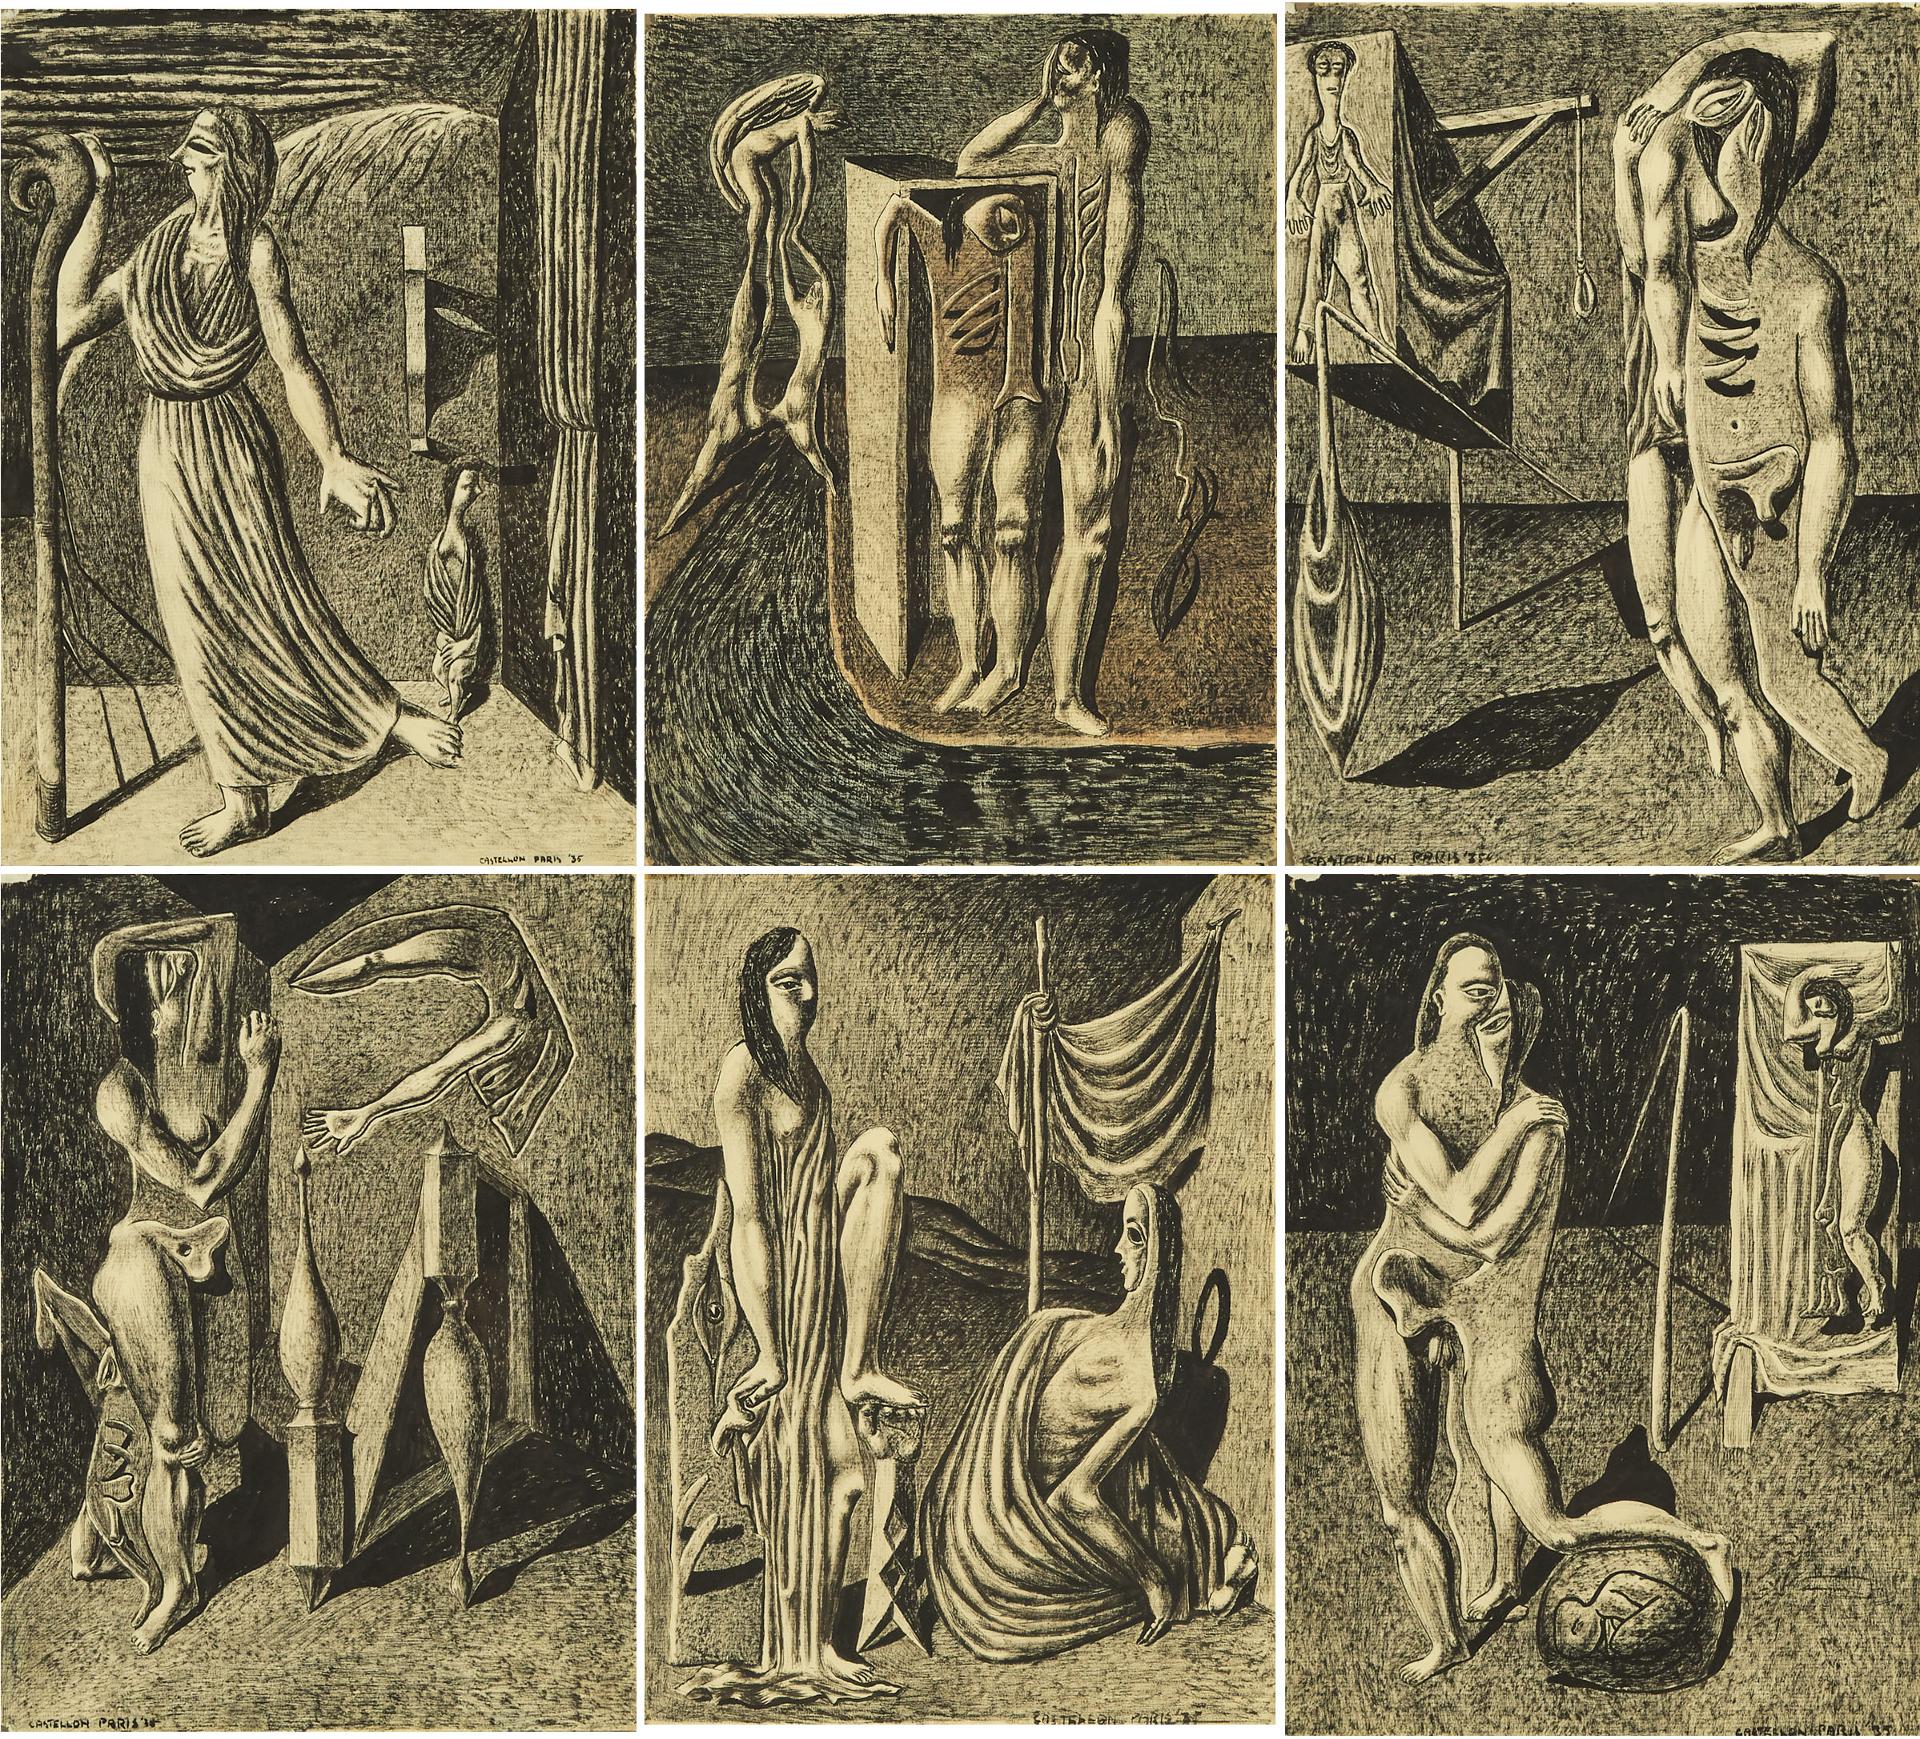 Federico Castellón - Six Surreal Studies At Paris, 1935